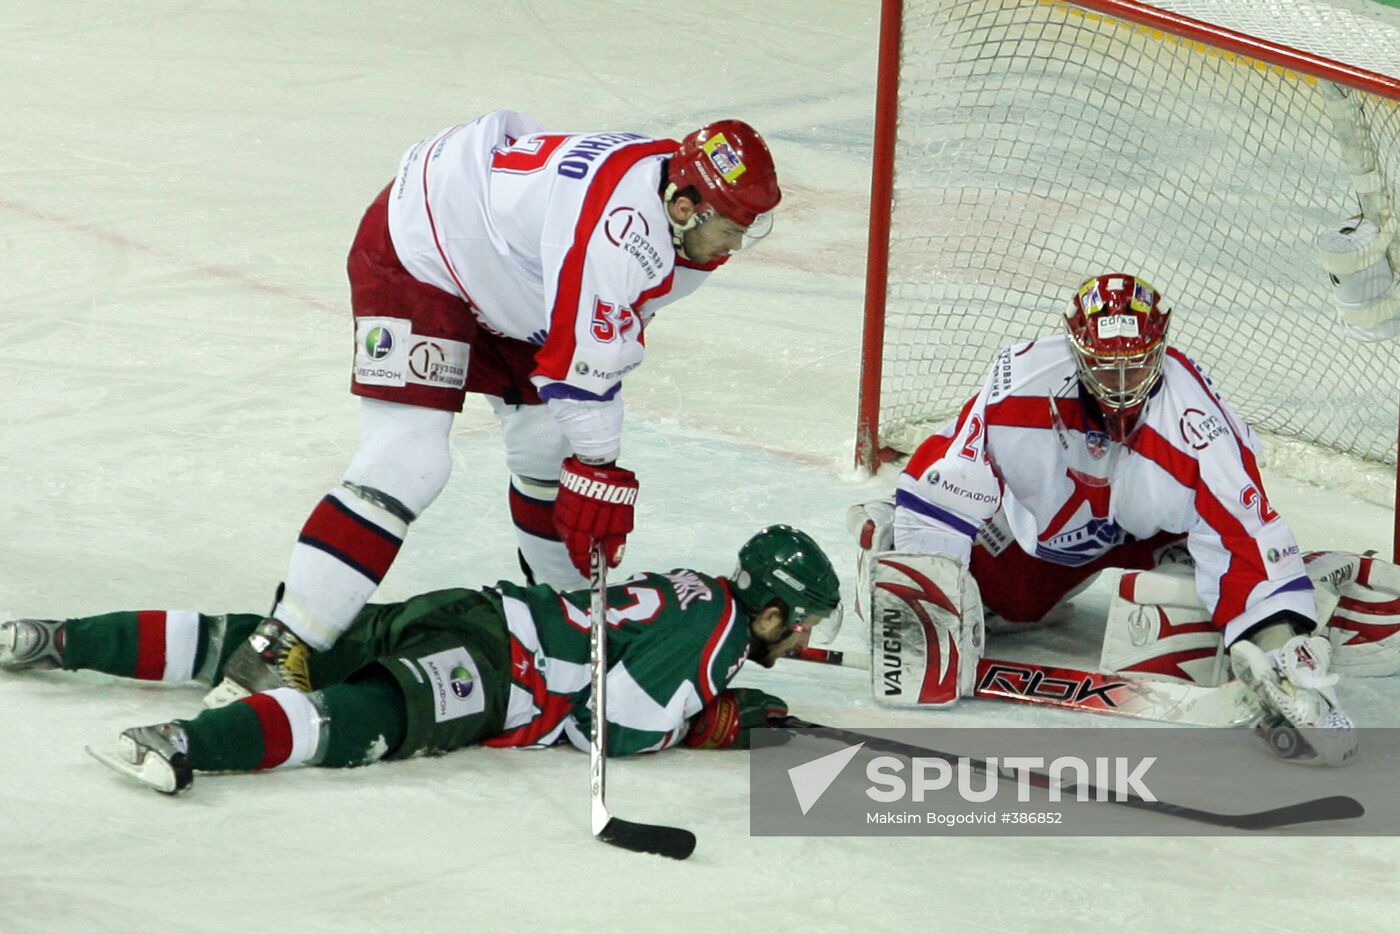 KHL finals: Ak Bars vs. Lokomotiv Yaroslavl 1-0